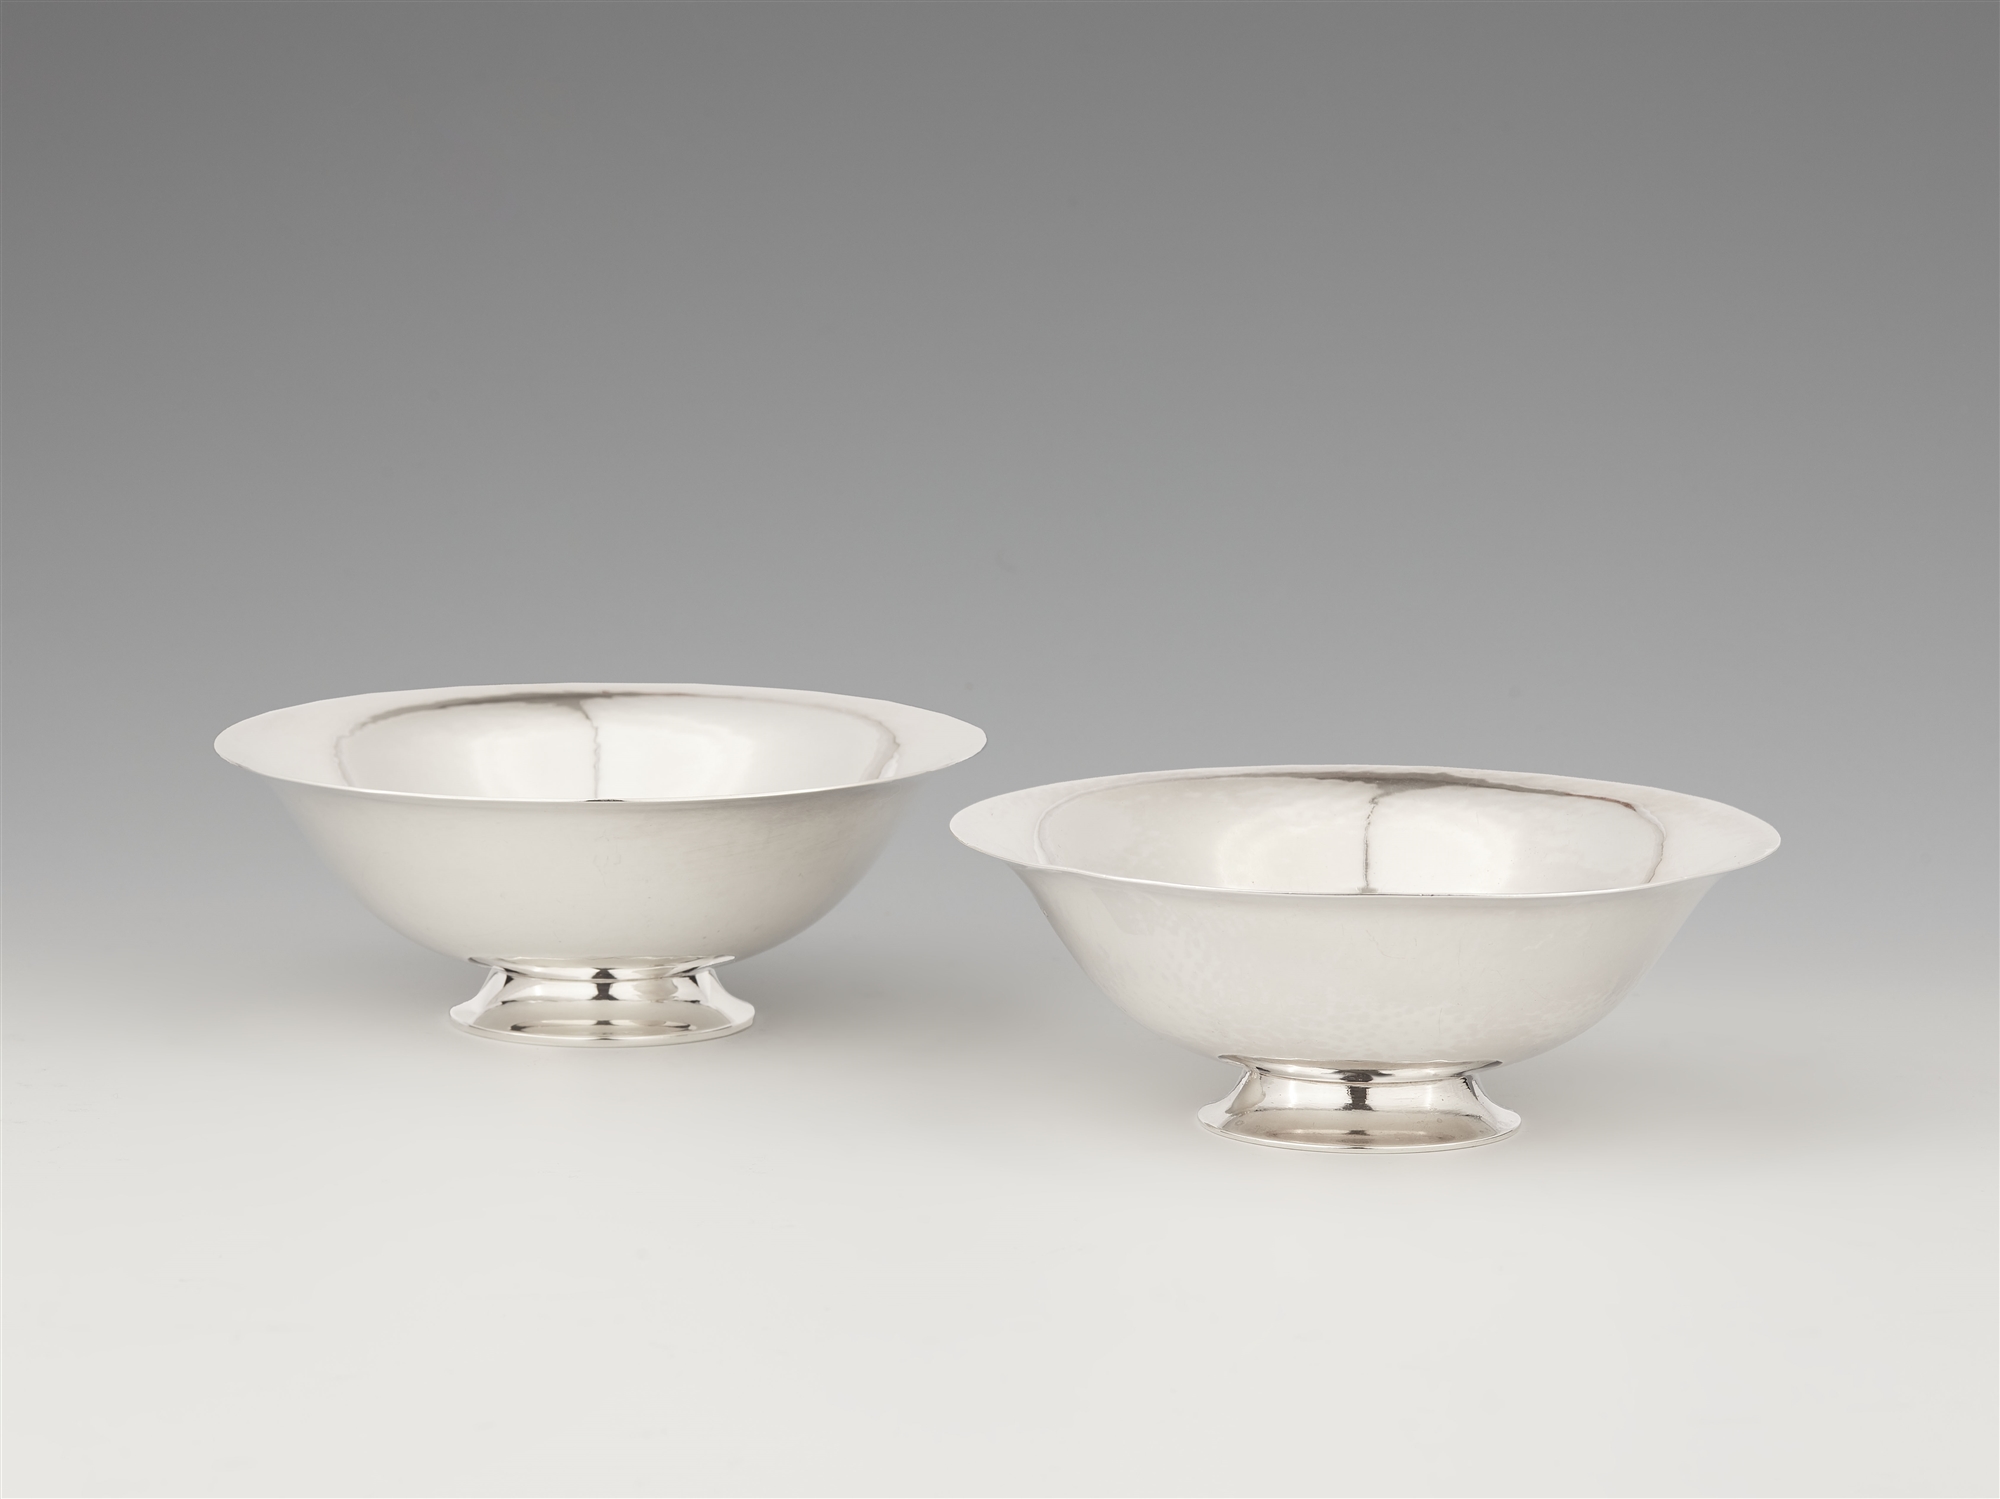 A pair of Copenhagen silver stembowls, no. 575